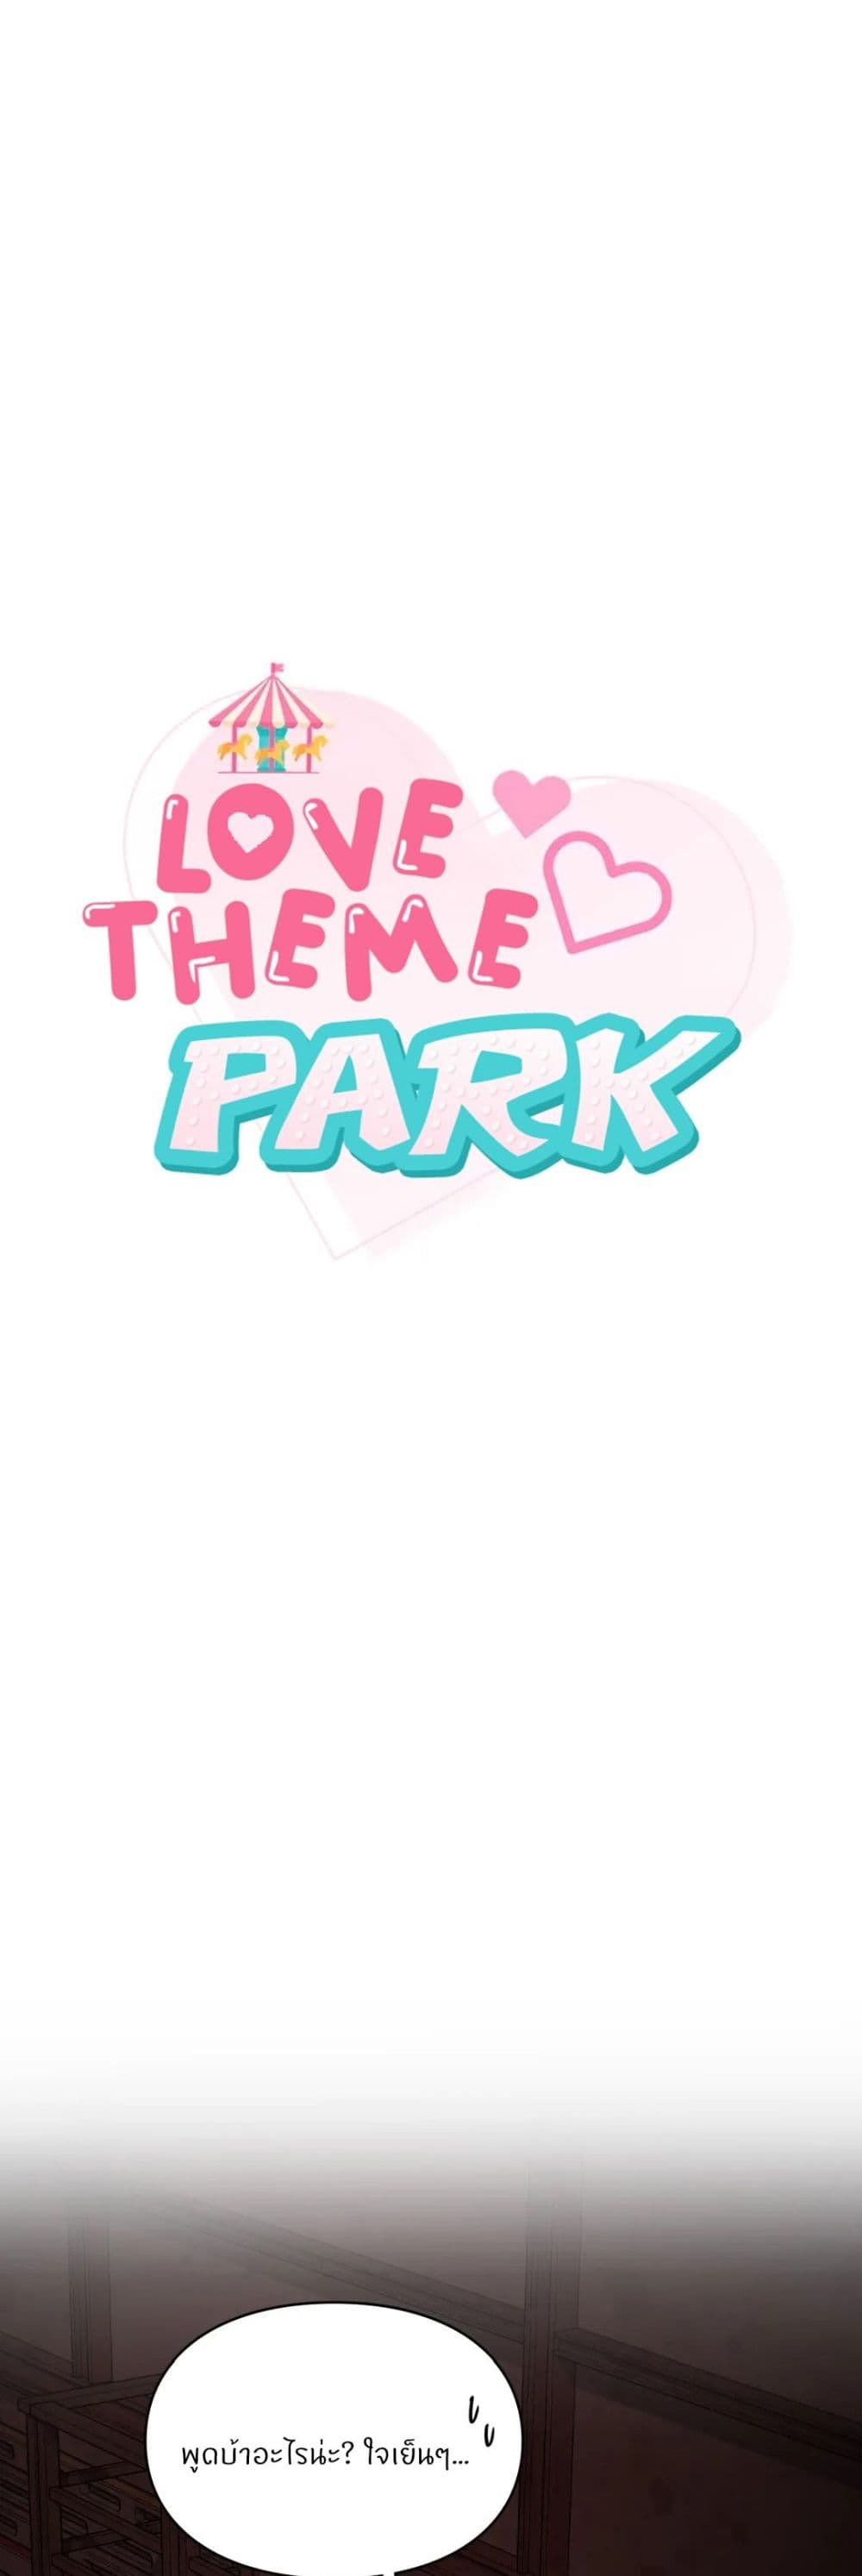 Love Theme Park 31-31